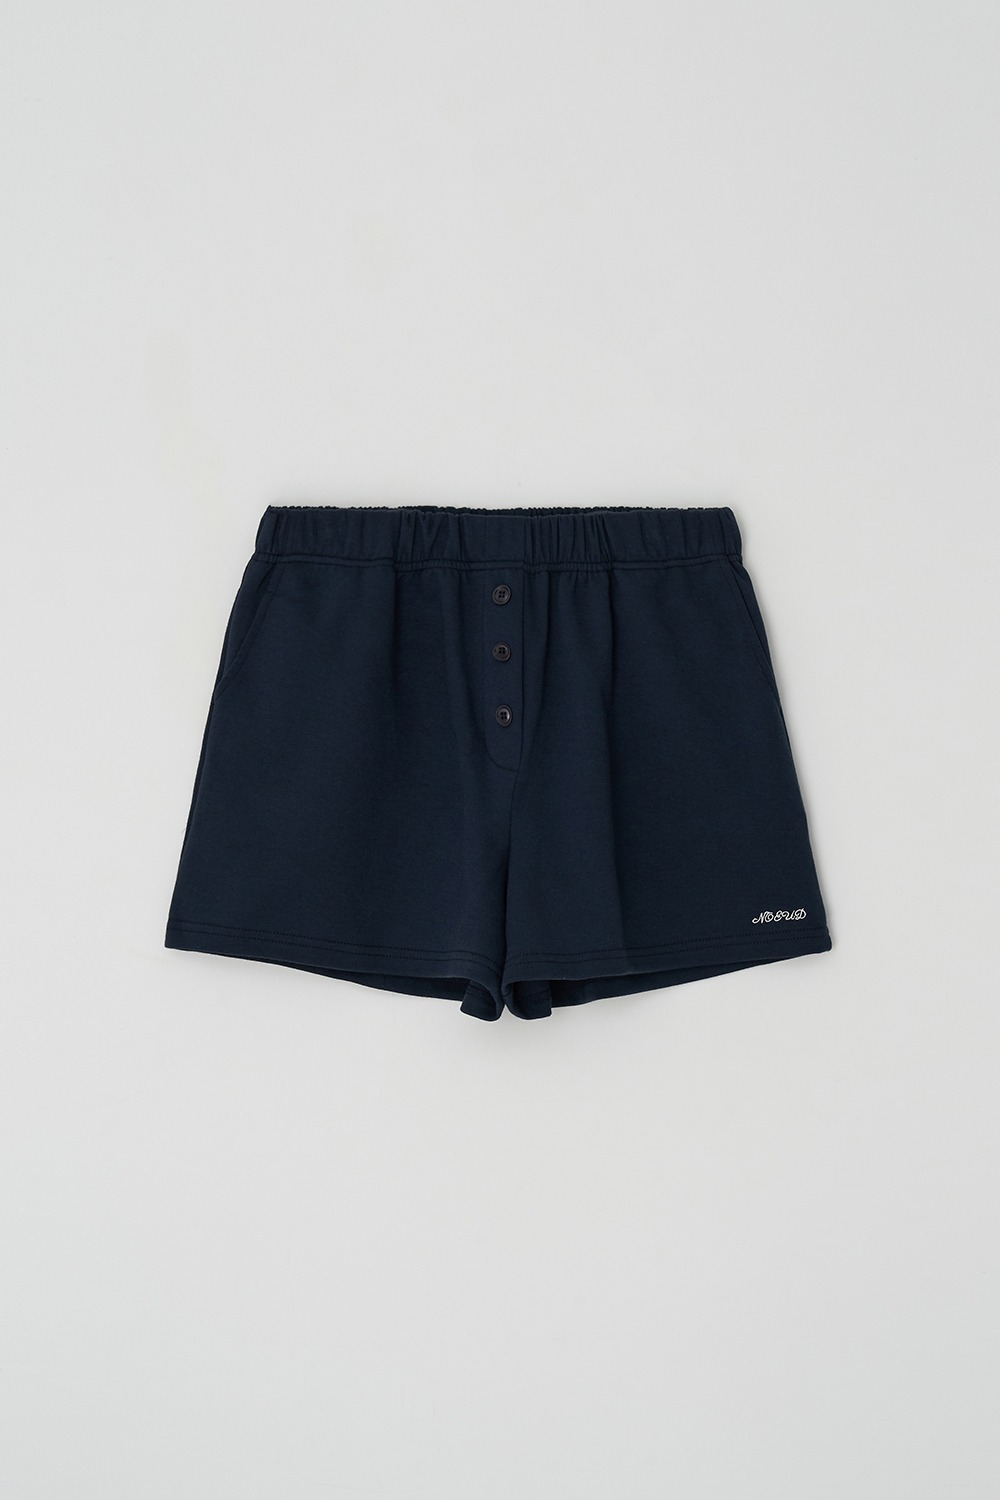 Sweat short-pants (Navy)